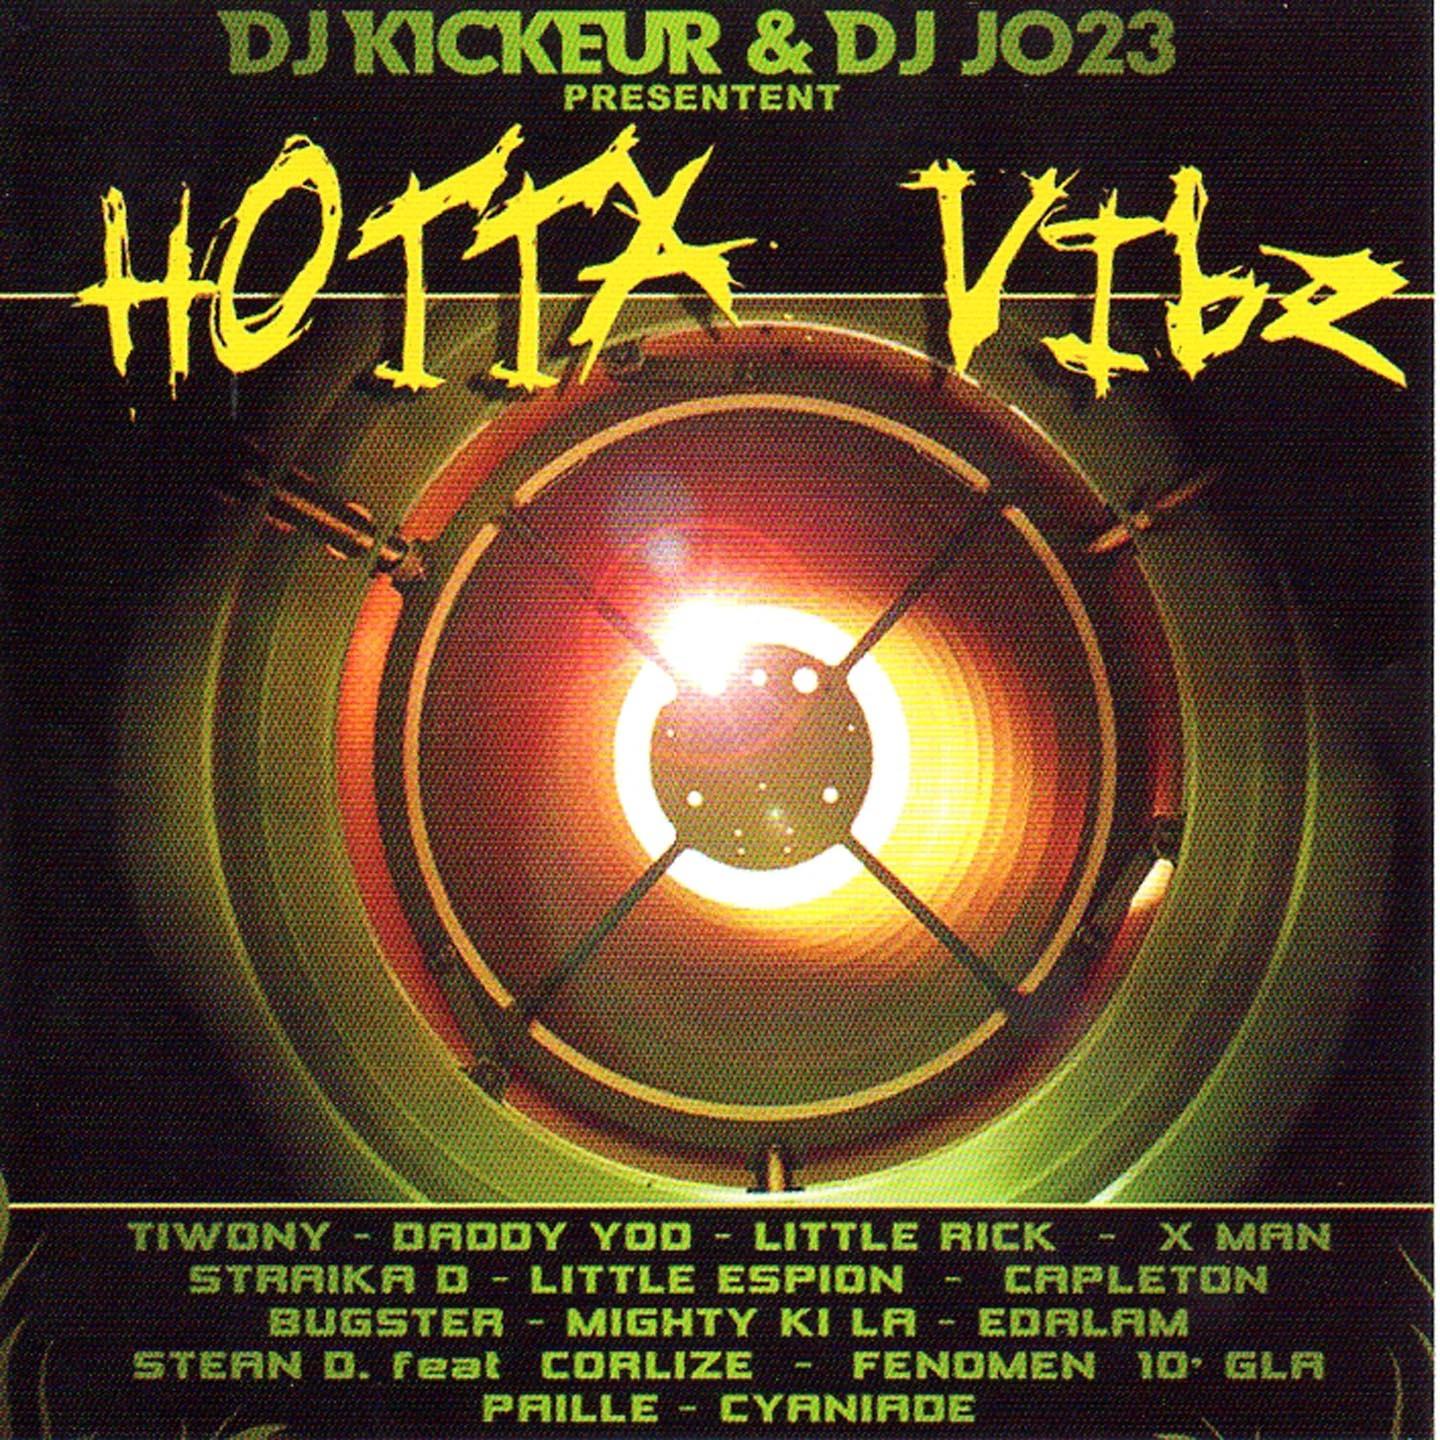 Hotta Vibz DJ Kickeur, DJ JO23 pre sentent...